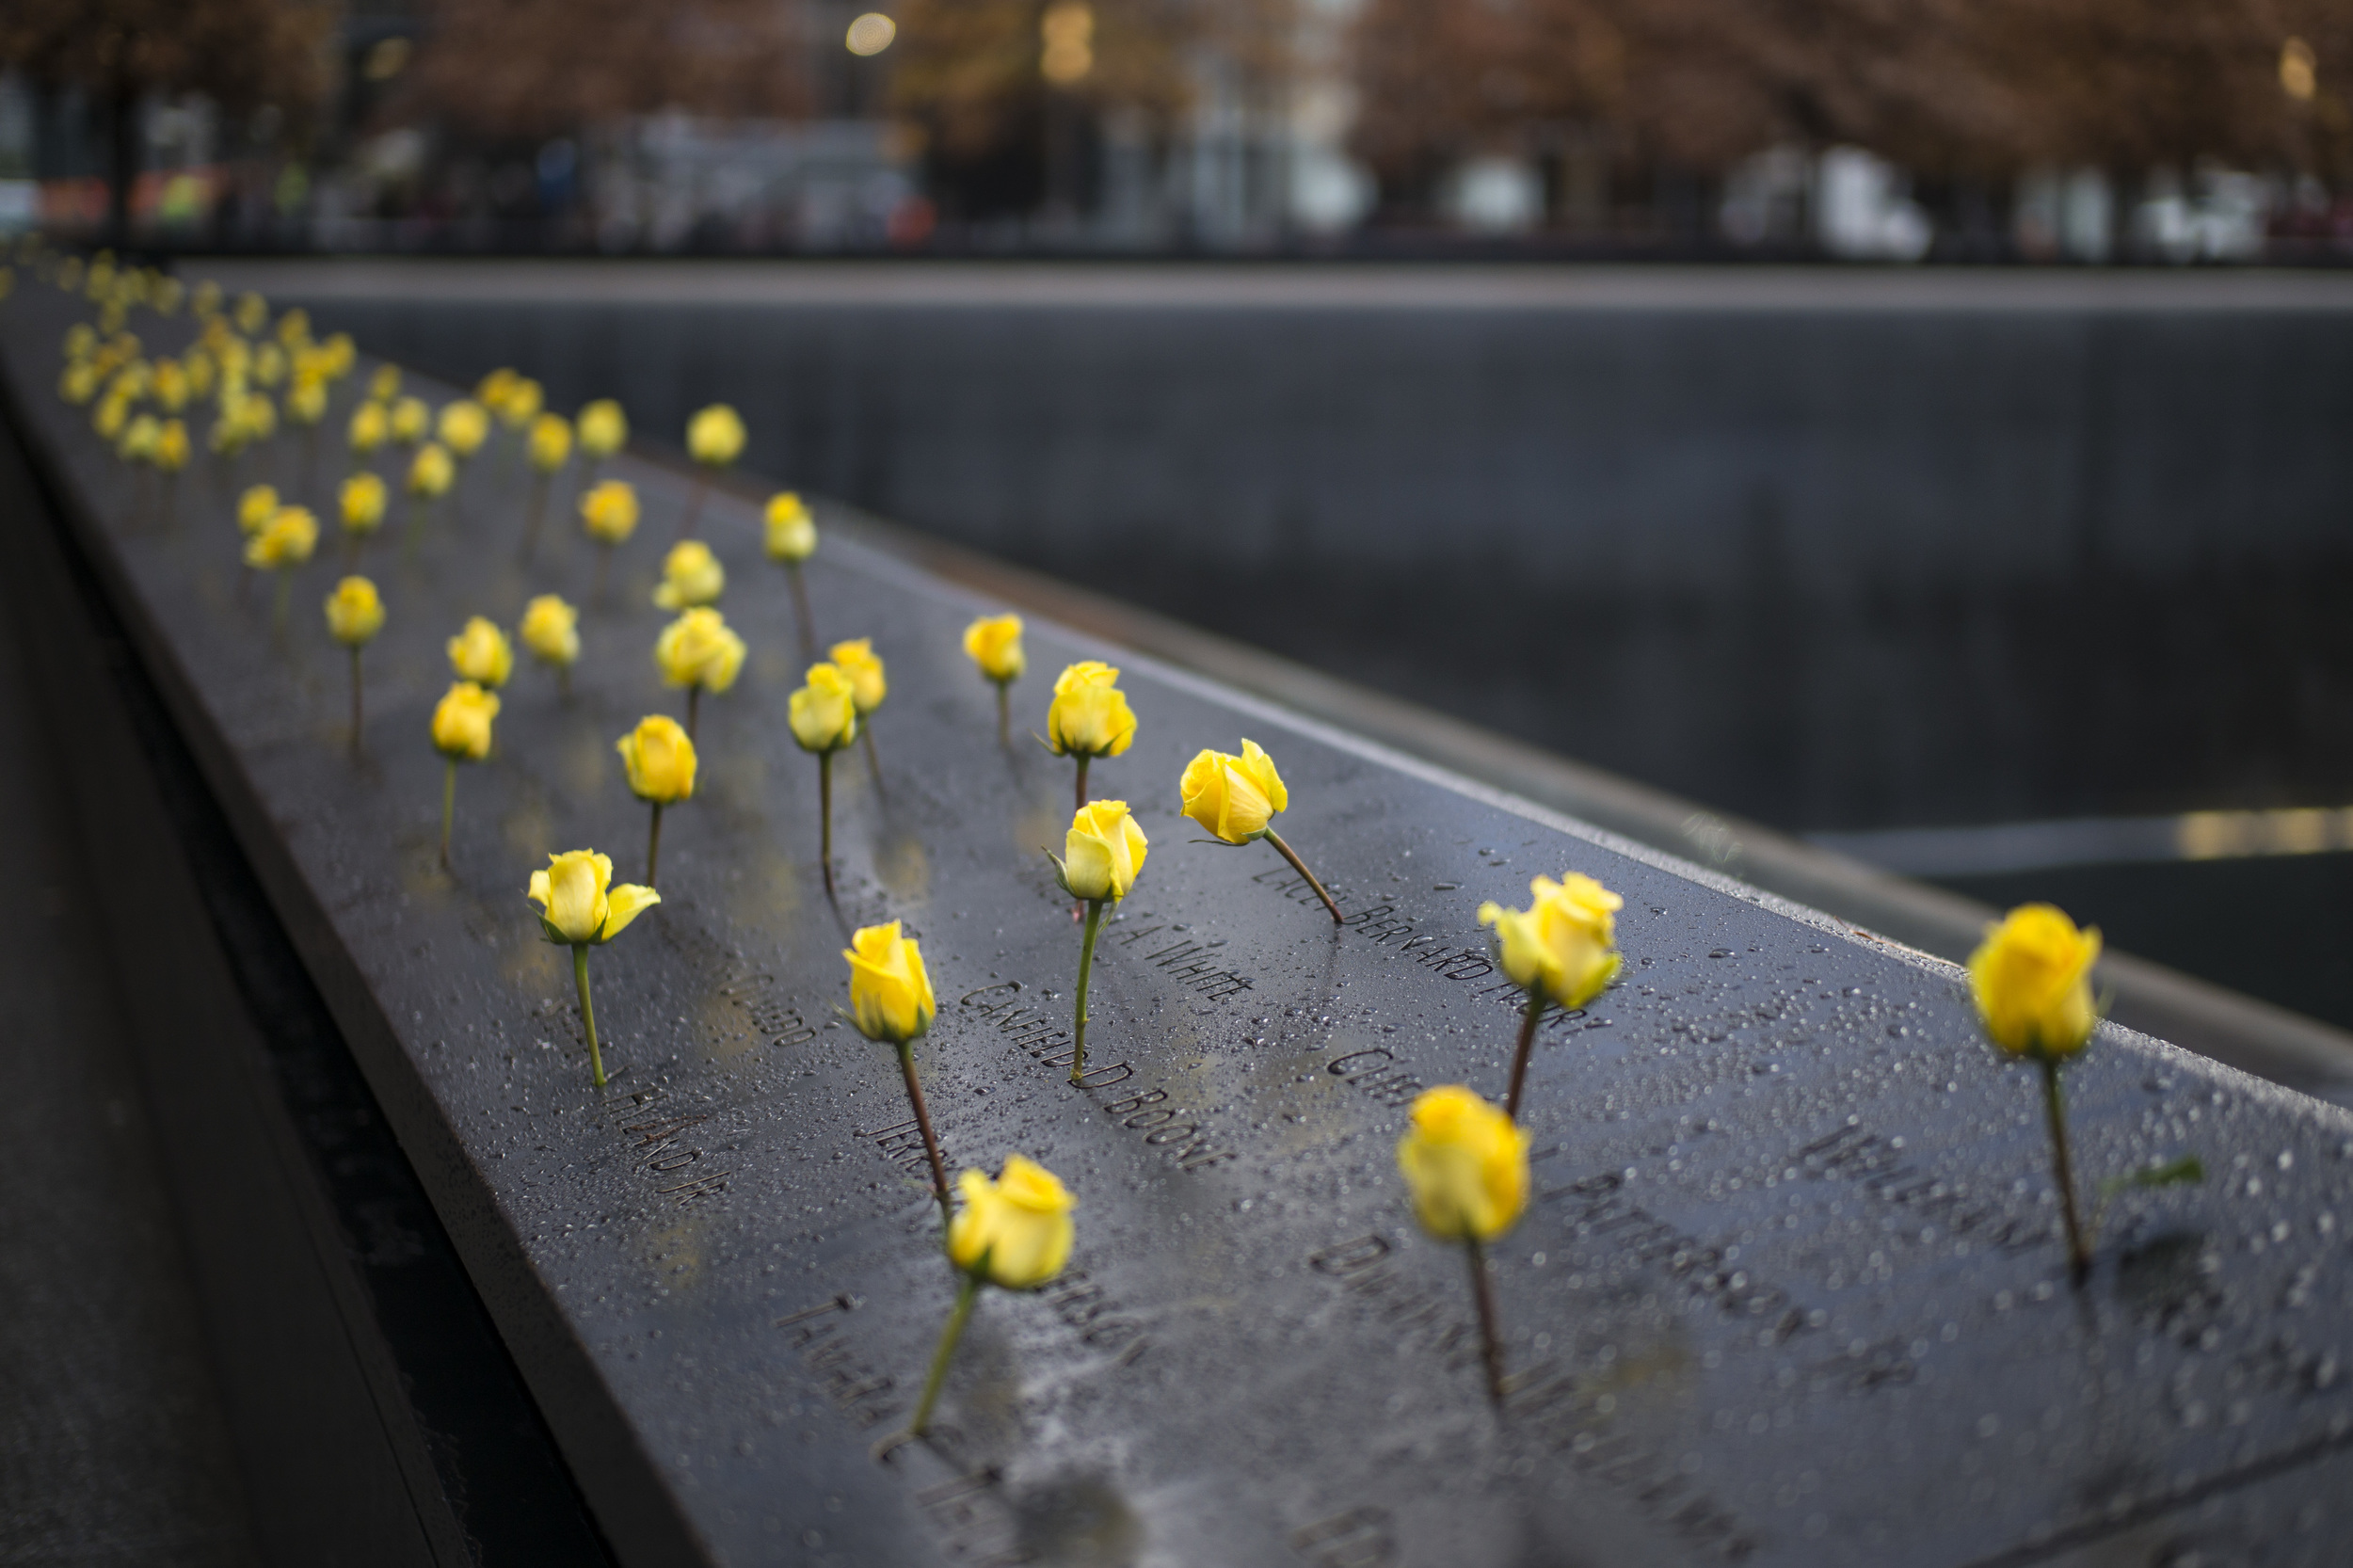  Photo: Courtesy of 9/11 Memorial 